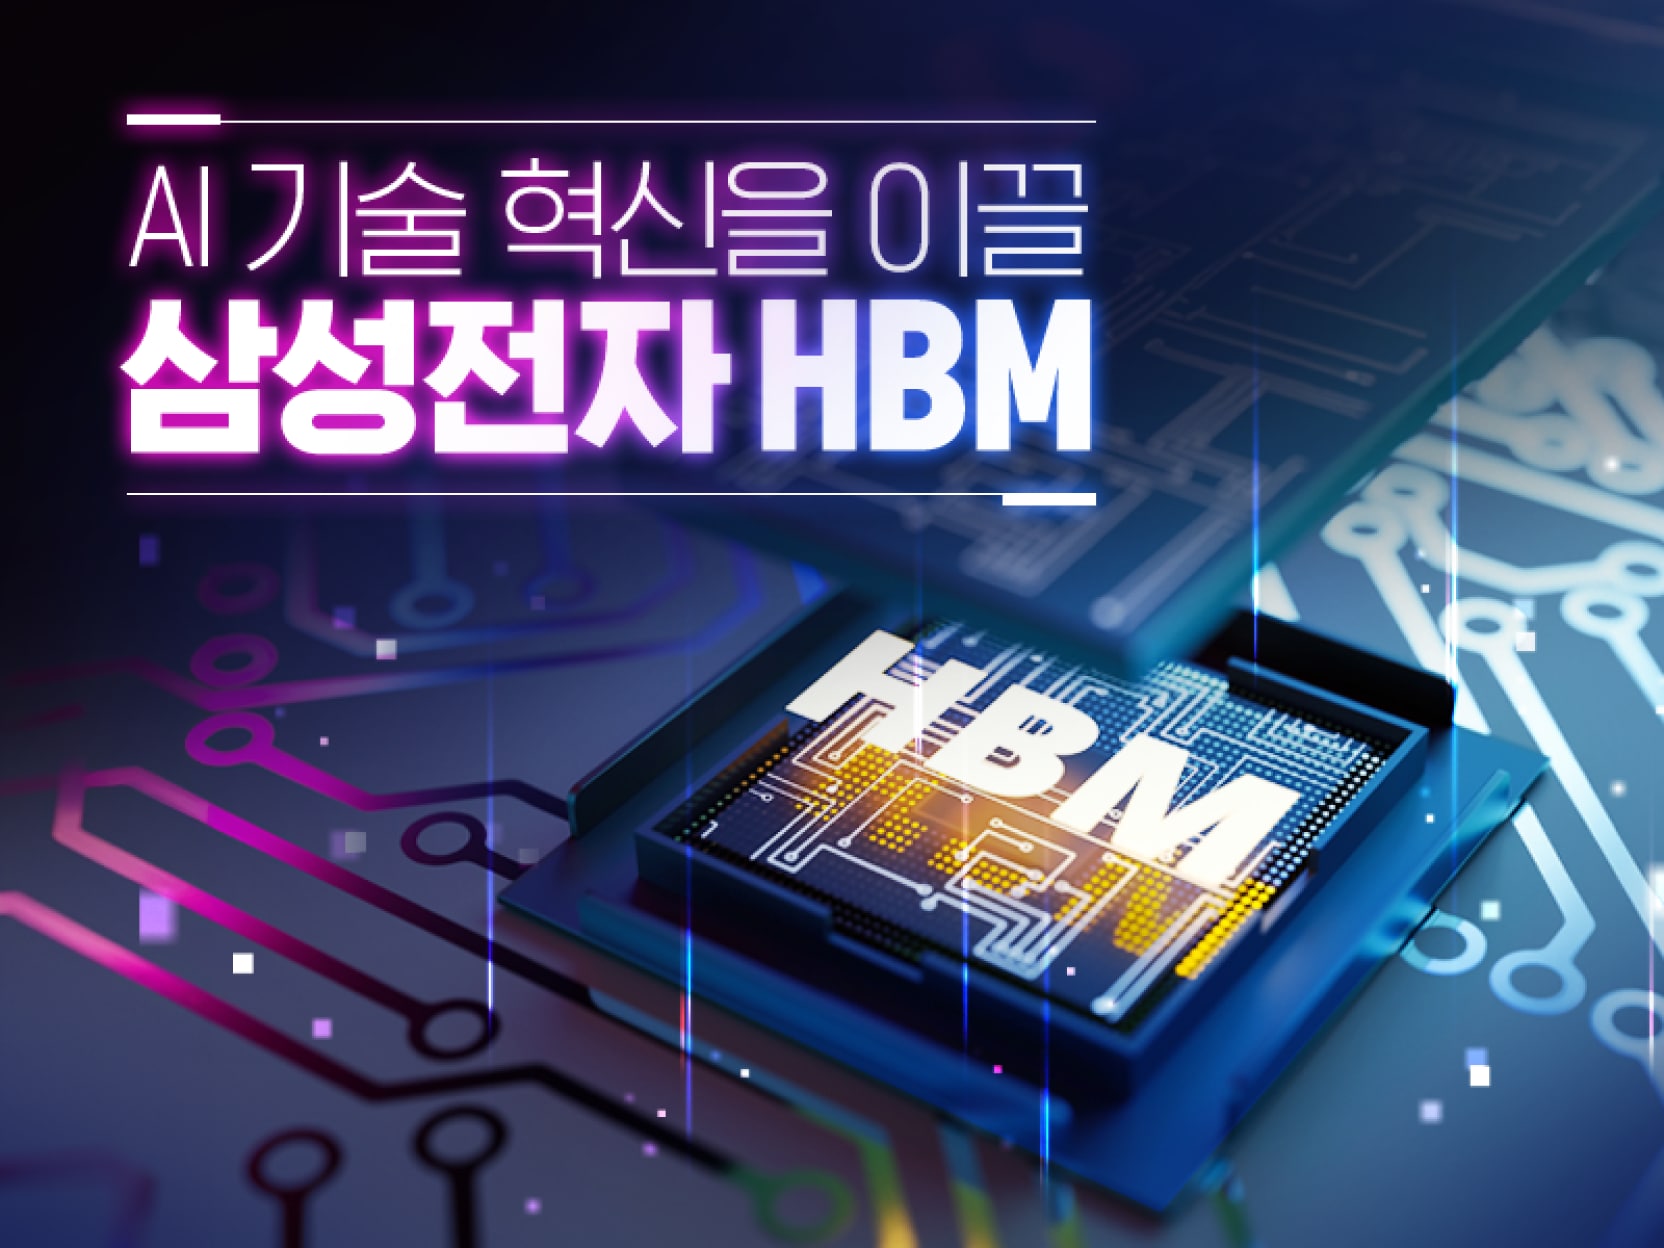 AI 기술 혁신을 이끄는 삼성전자 HBM 칩의 클로즈업 이미지로 칩 위 'HBM' 텍스트 강조